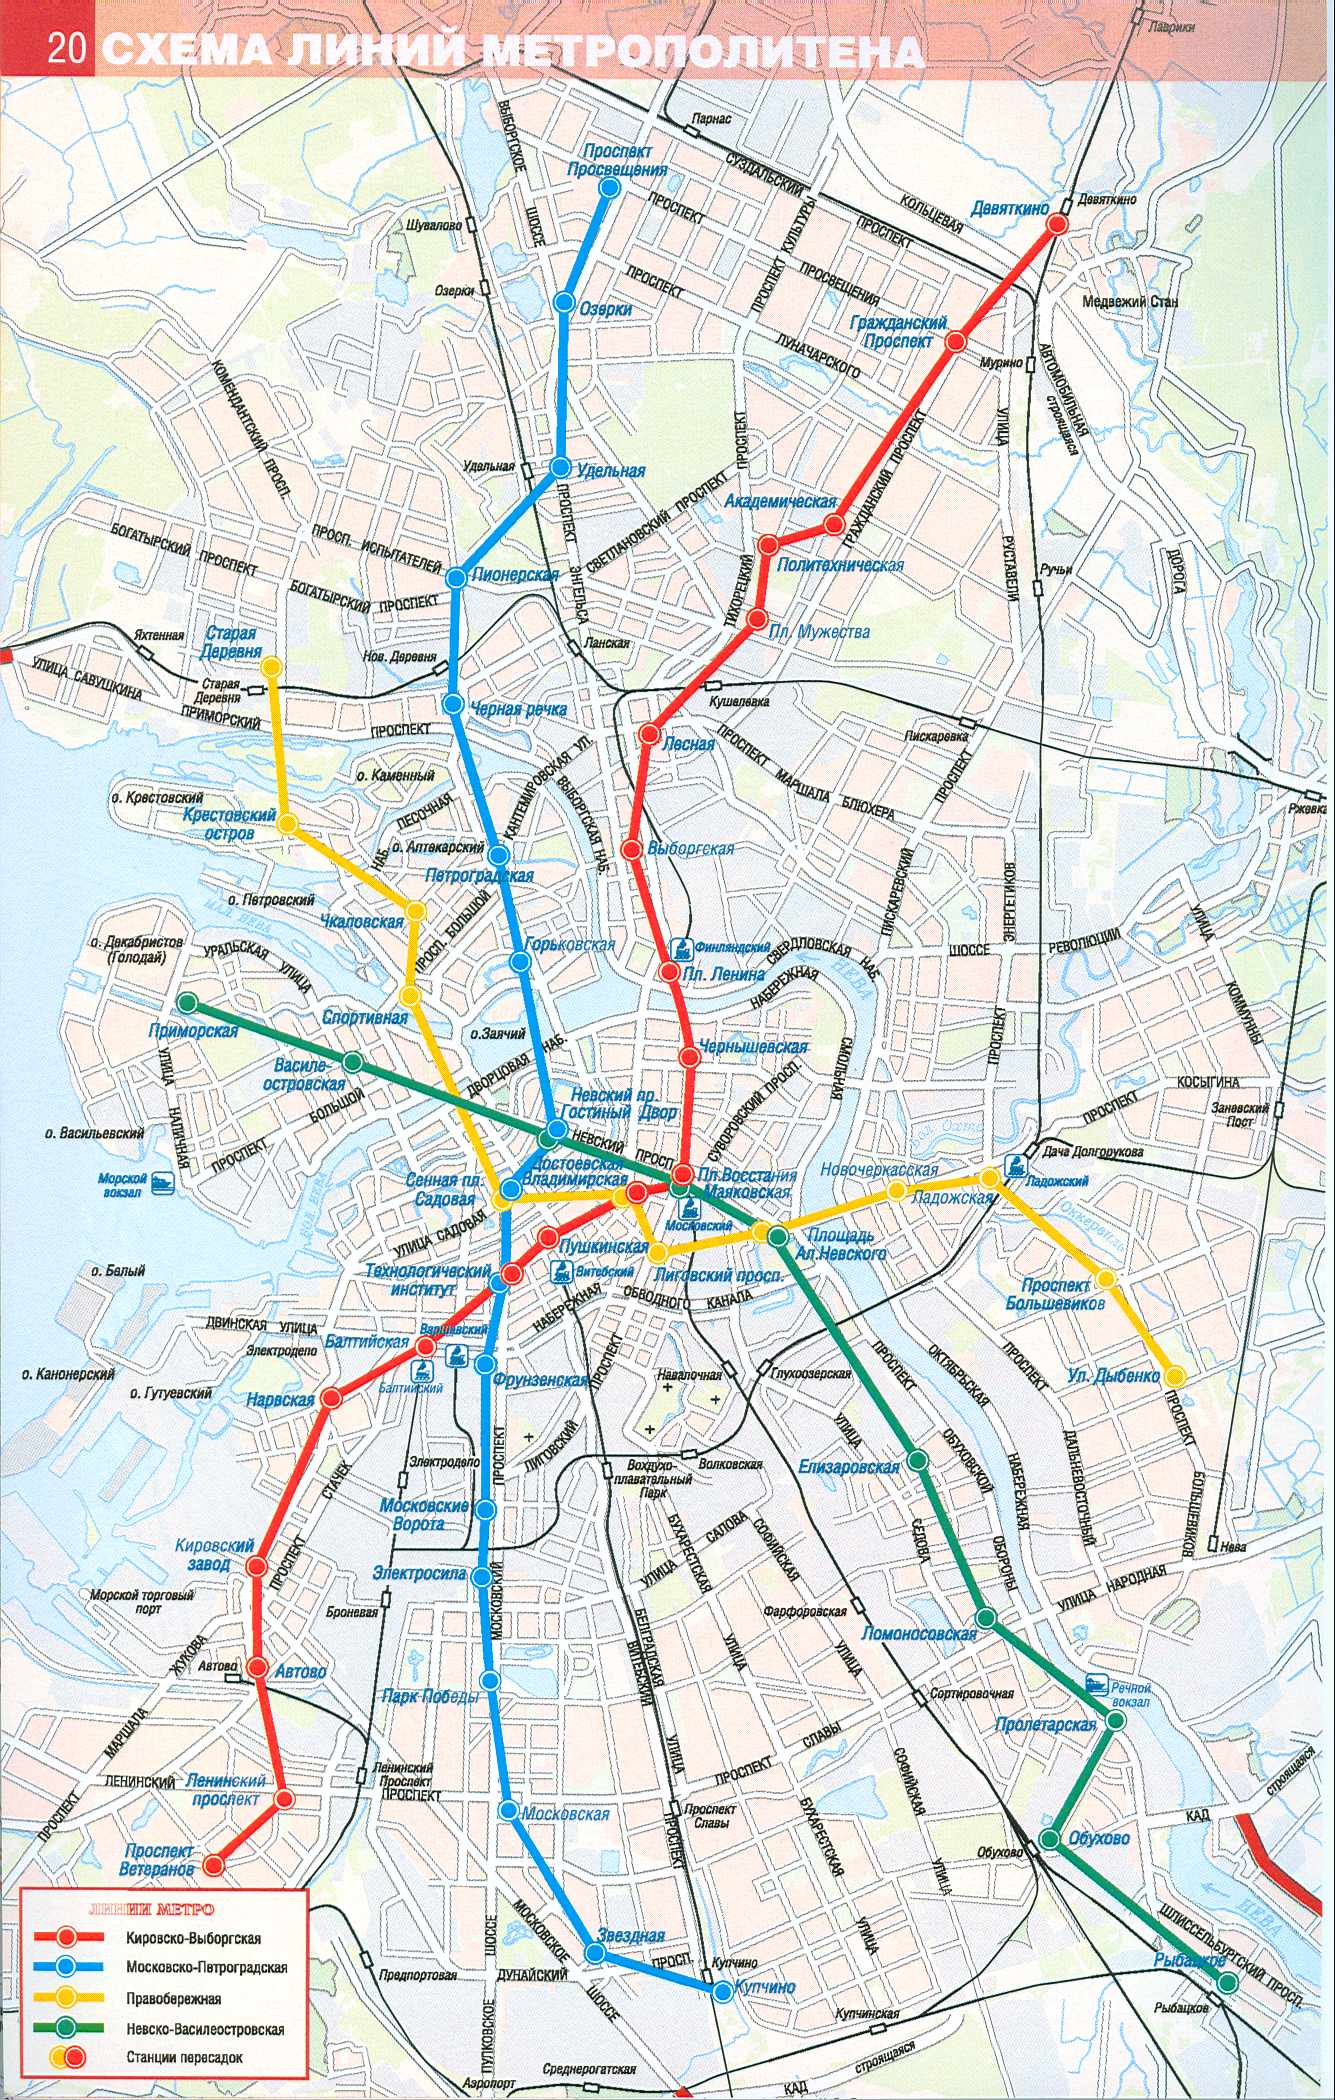 Карта метро Петербурга. Новая крата схема метро г.Петербург, A0 - 